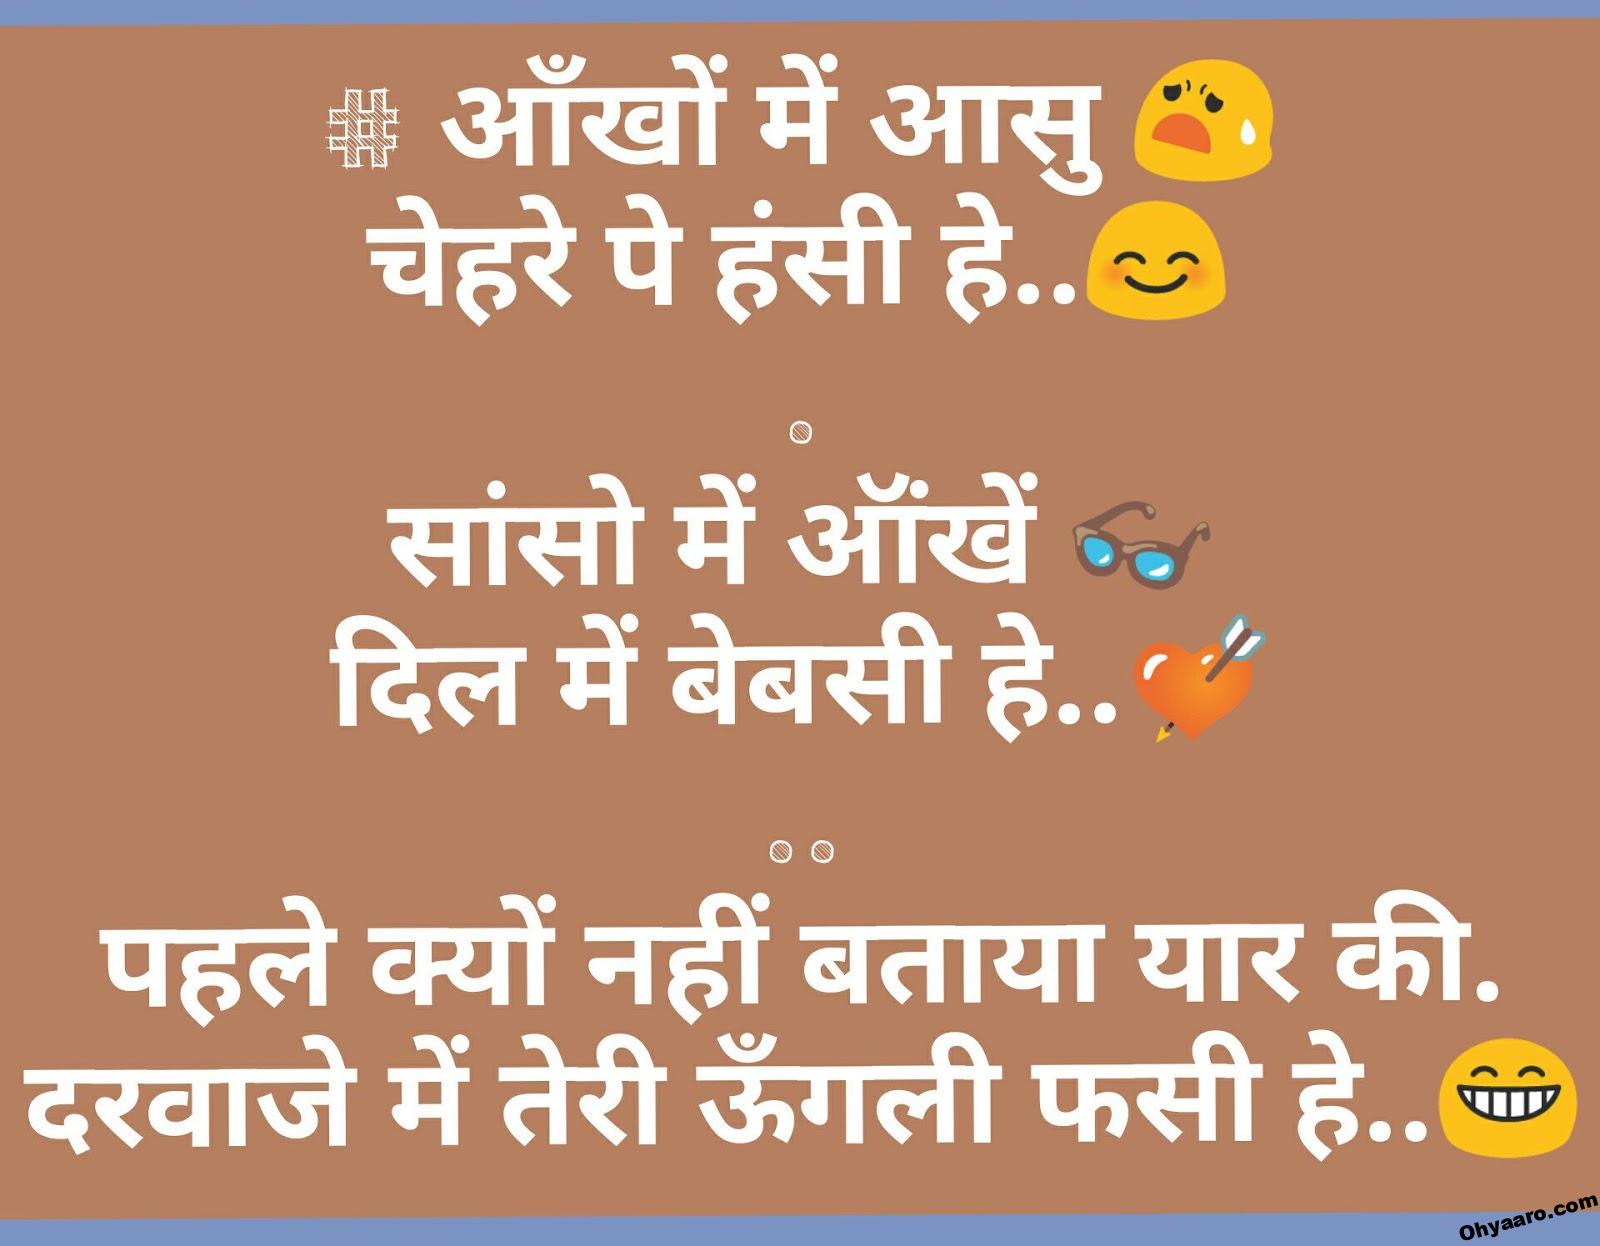 Funny Hindi Joke Images Download